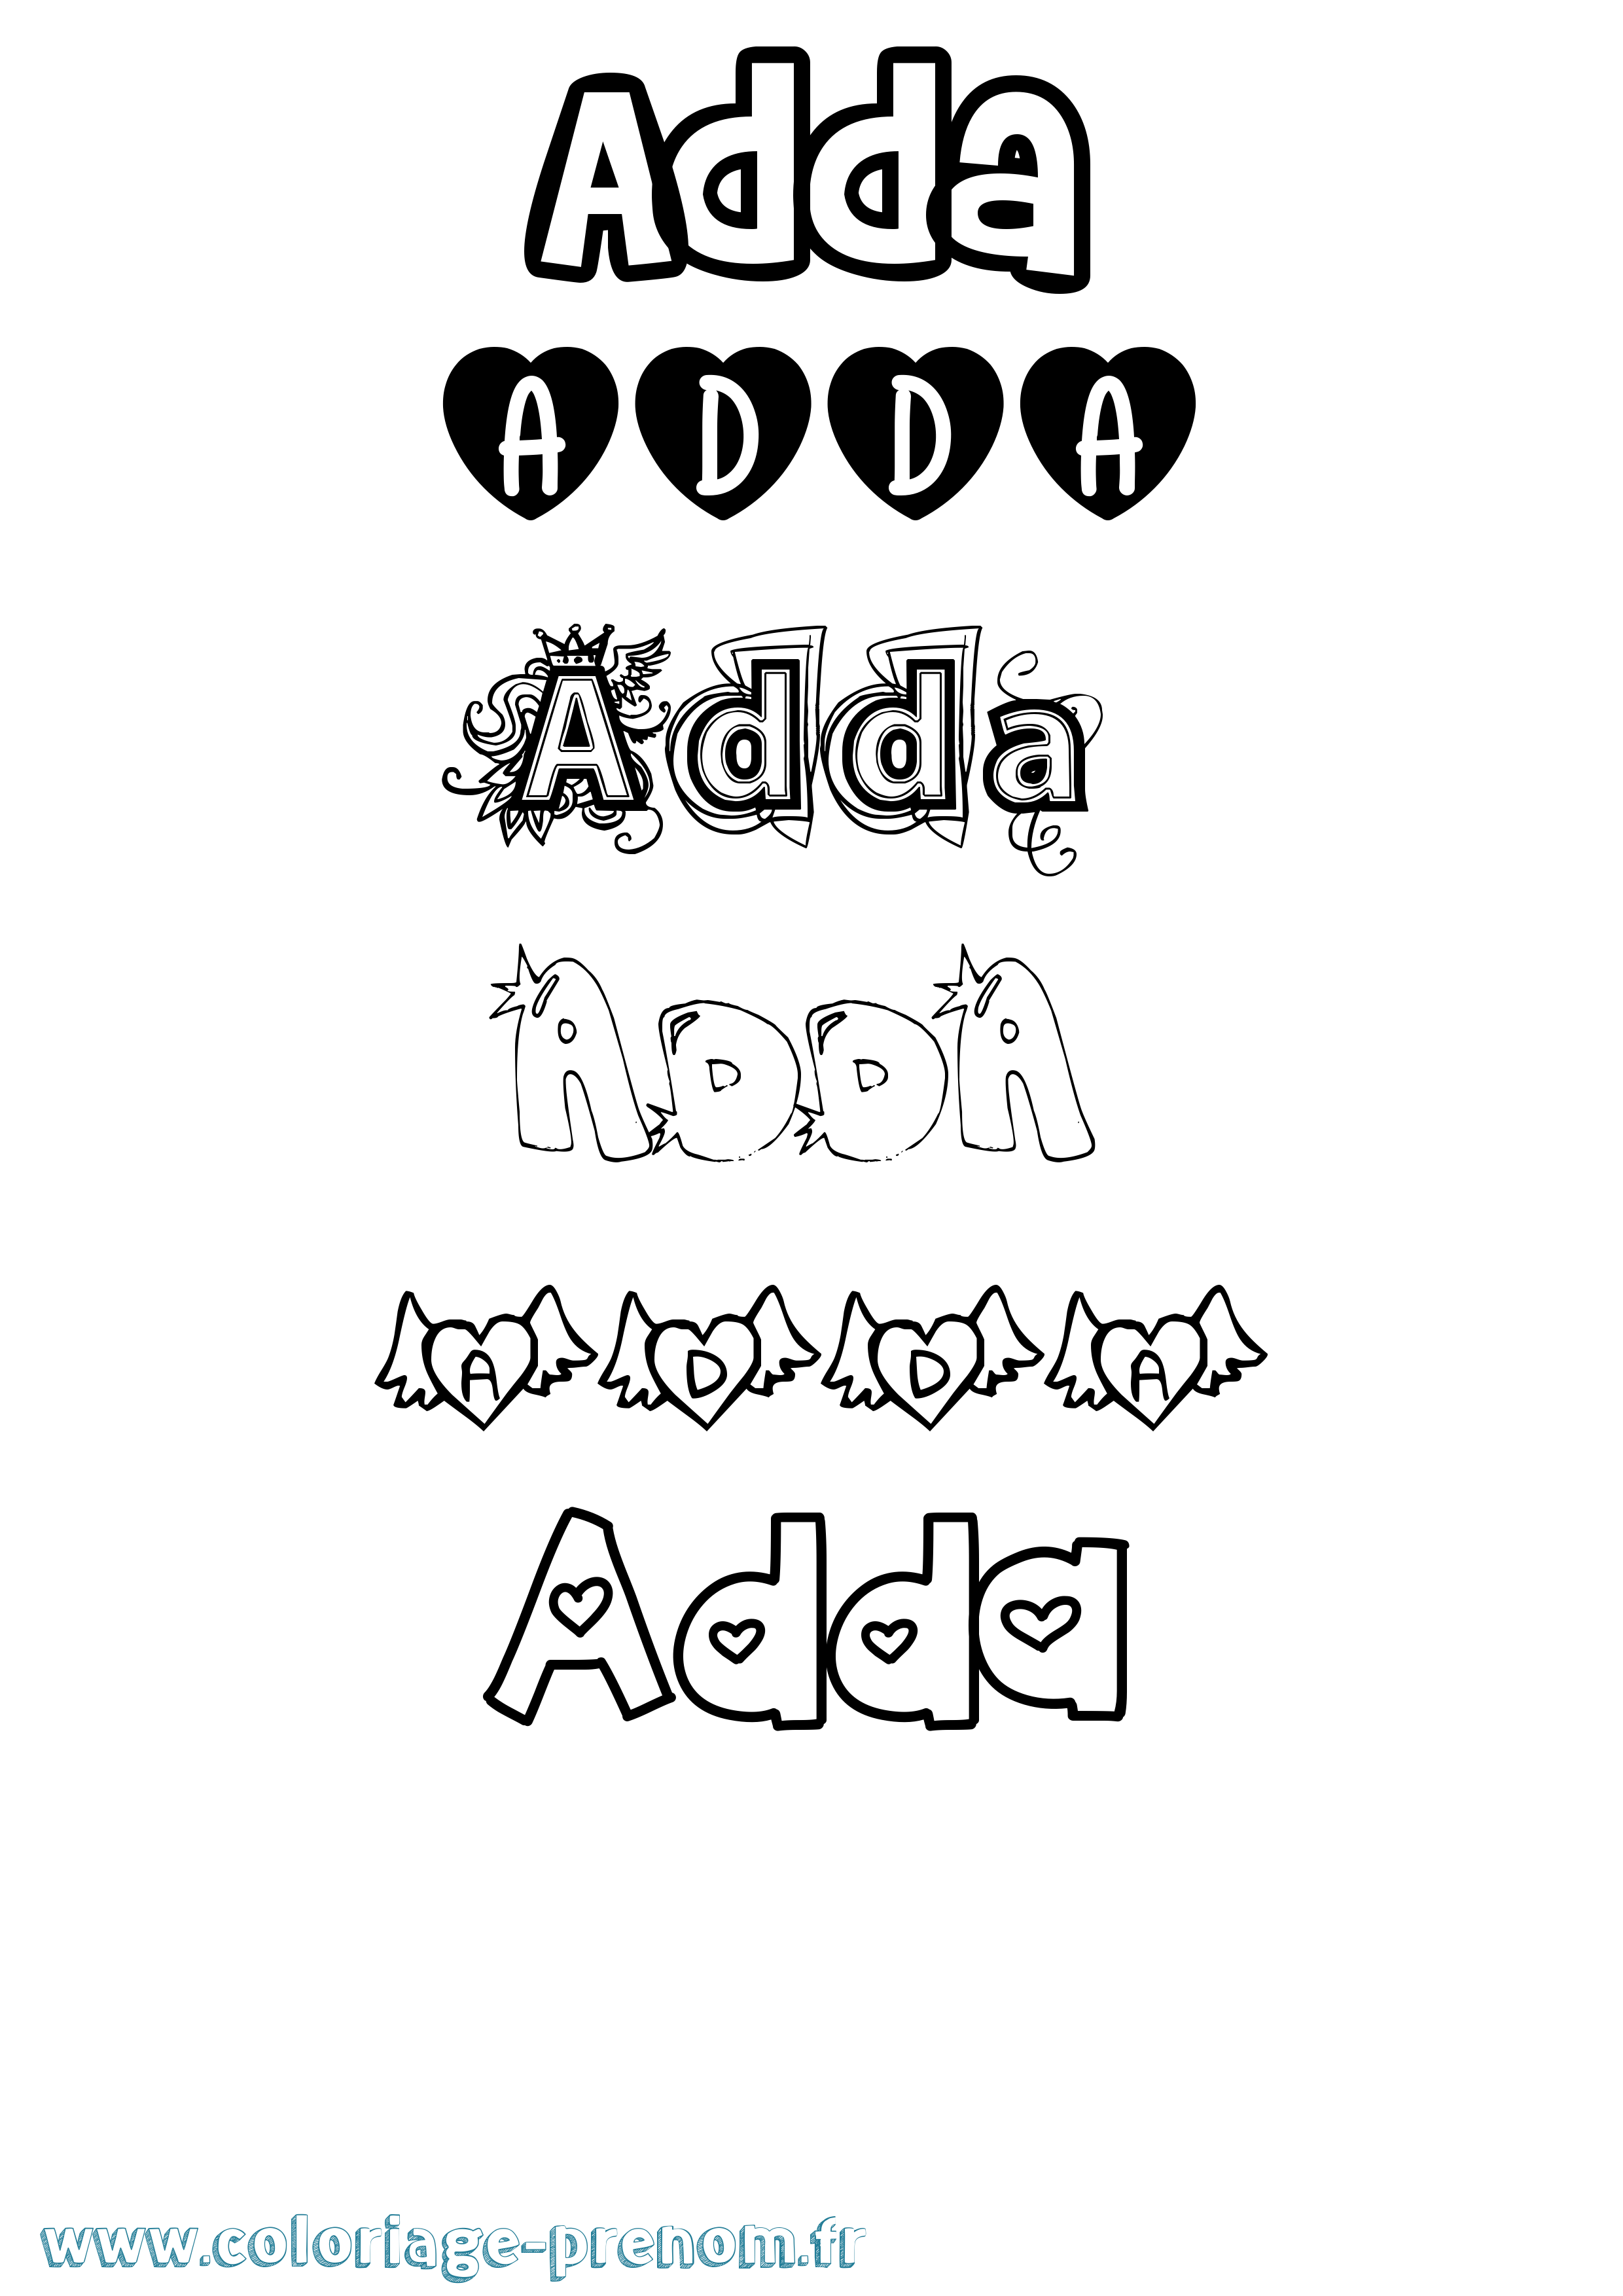 Coloriage prénom Adda Girly